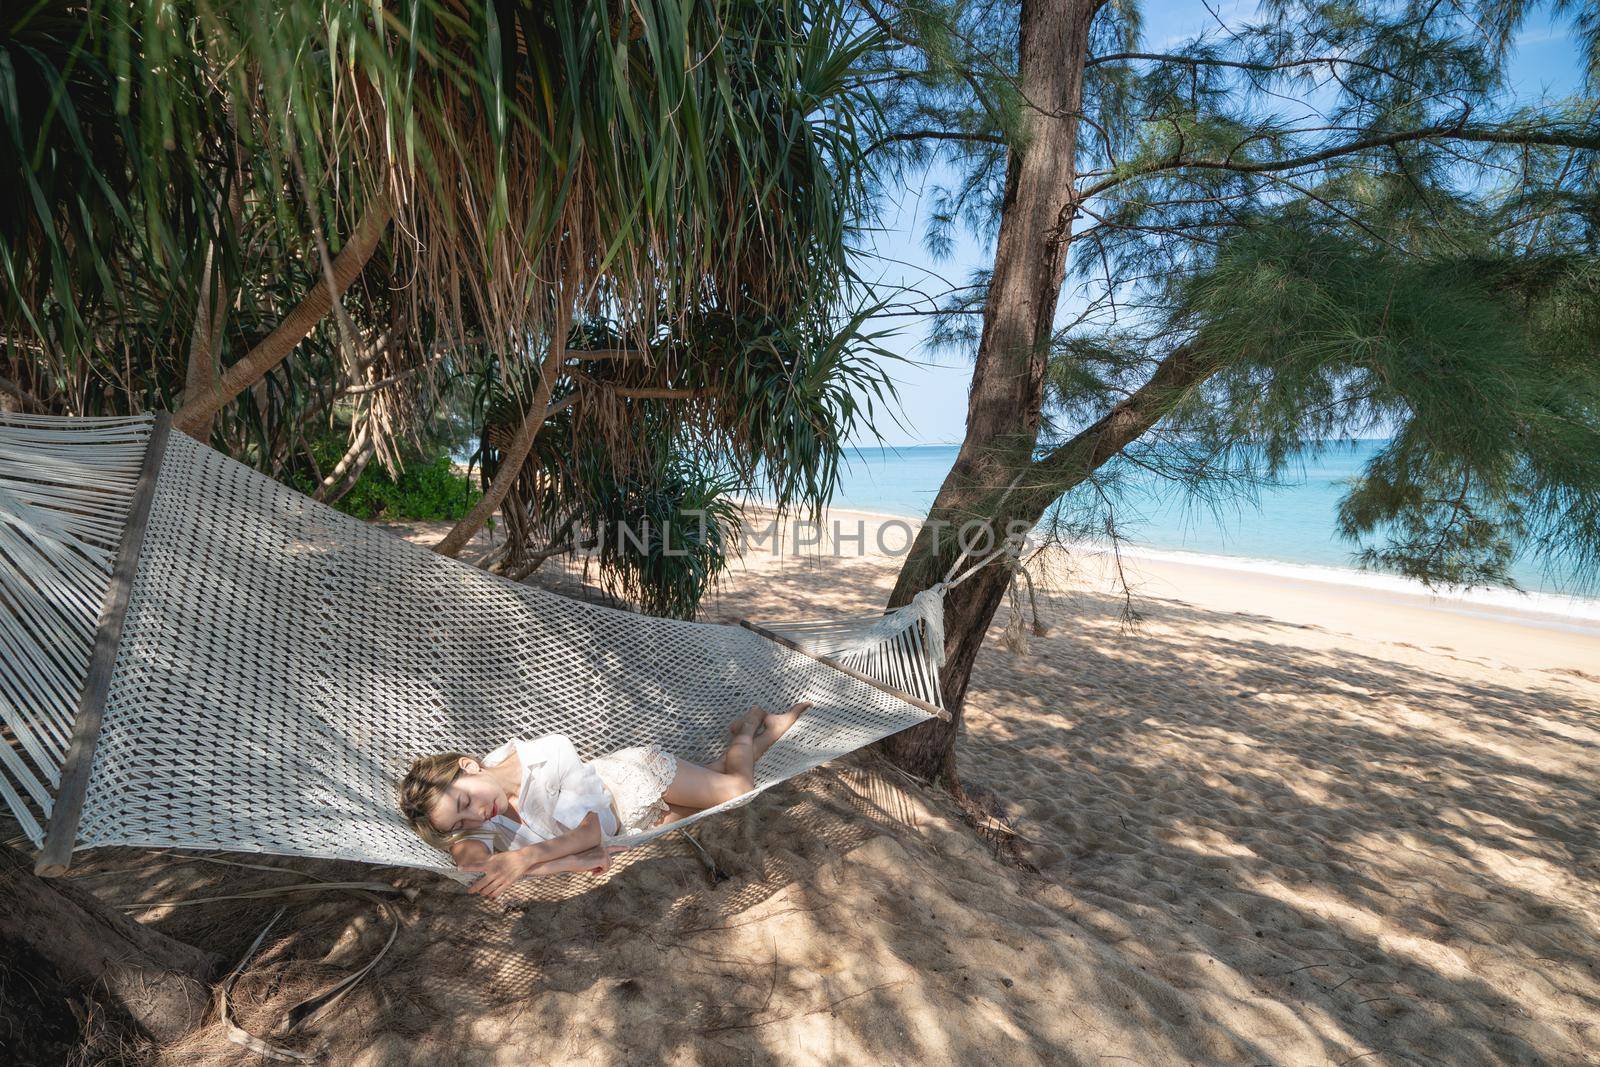 Woman lying in a hammock under the tree shadow on a beach.